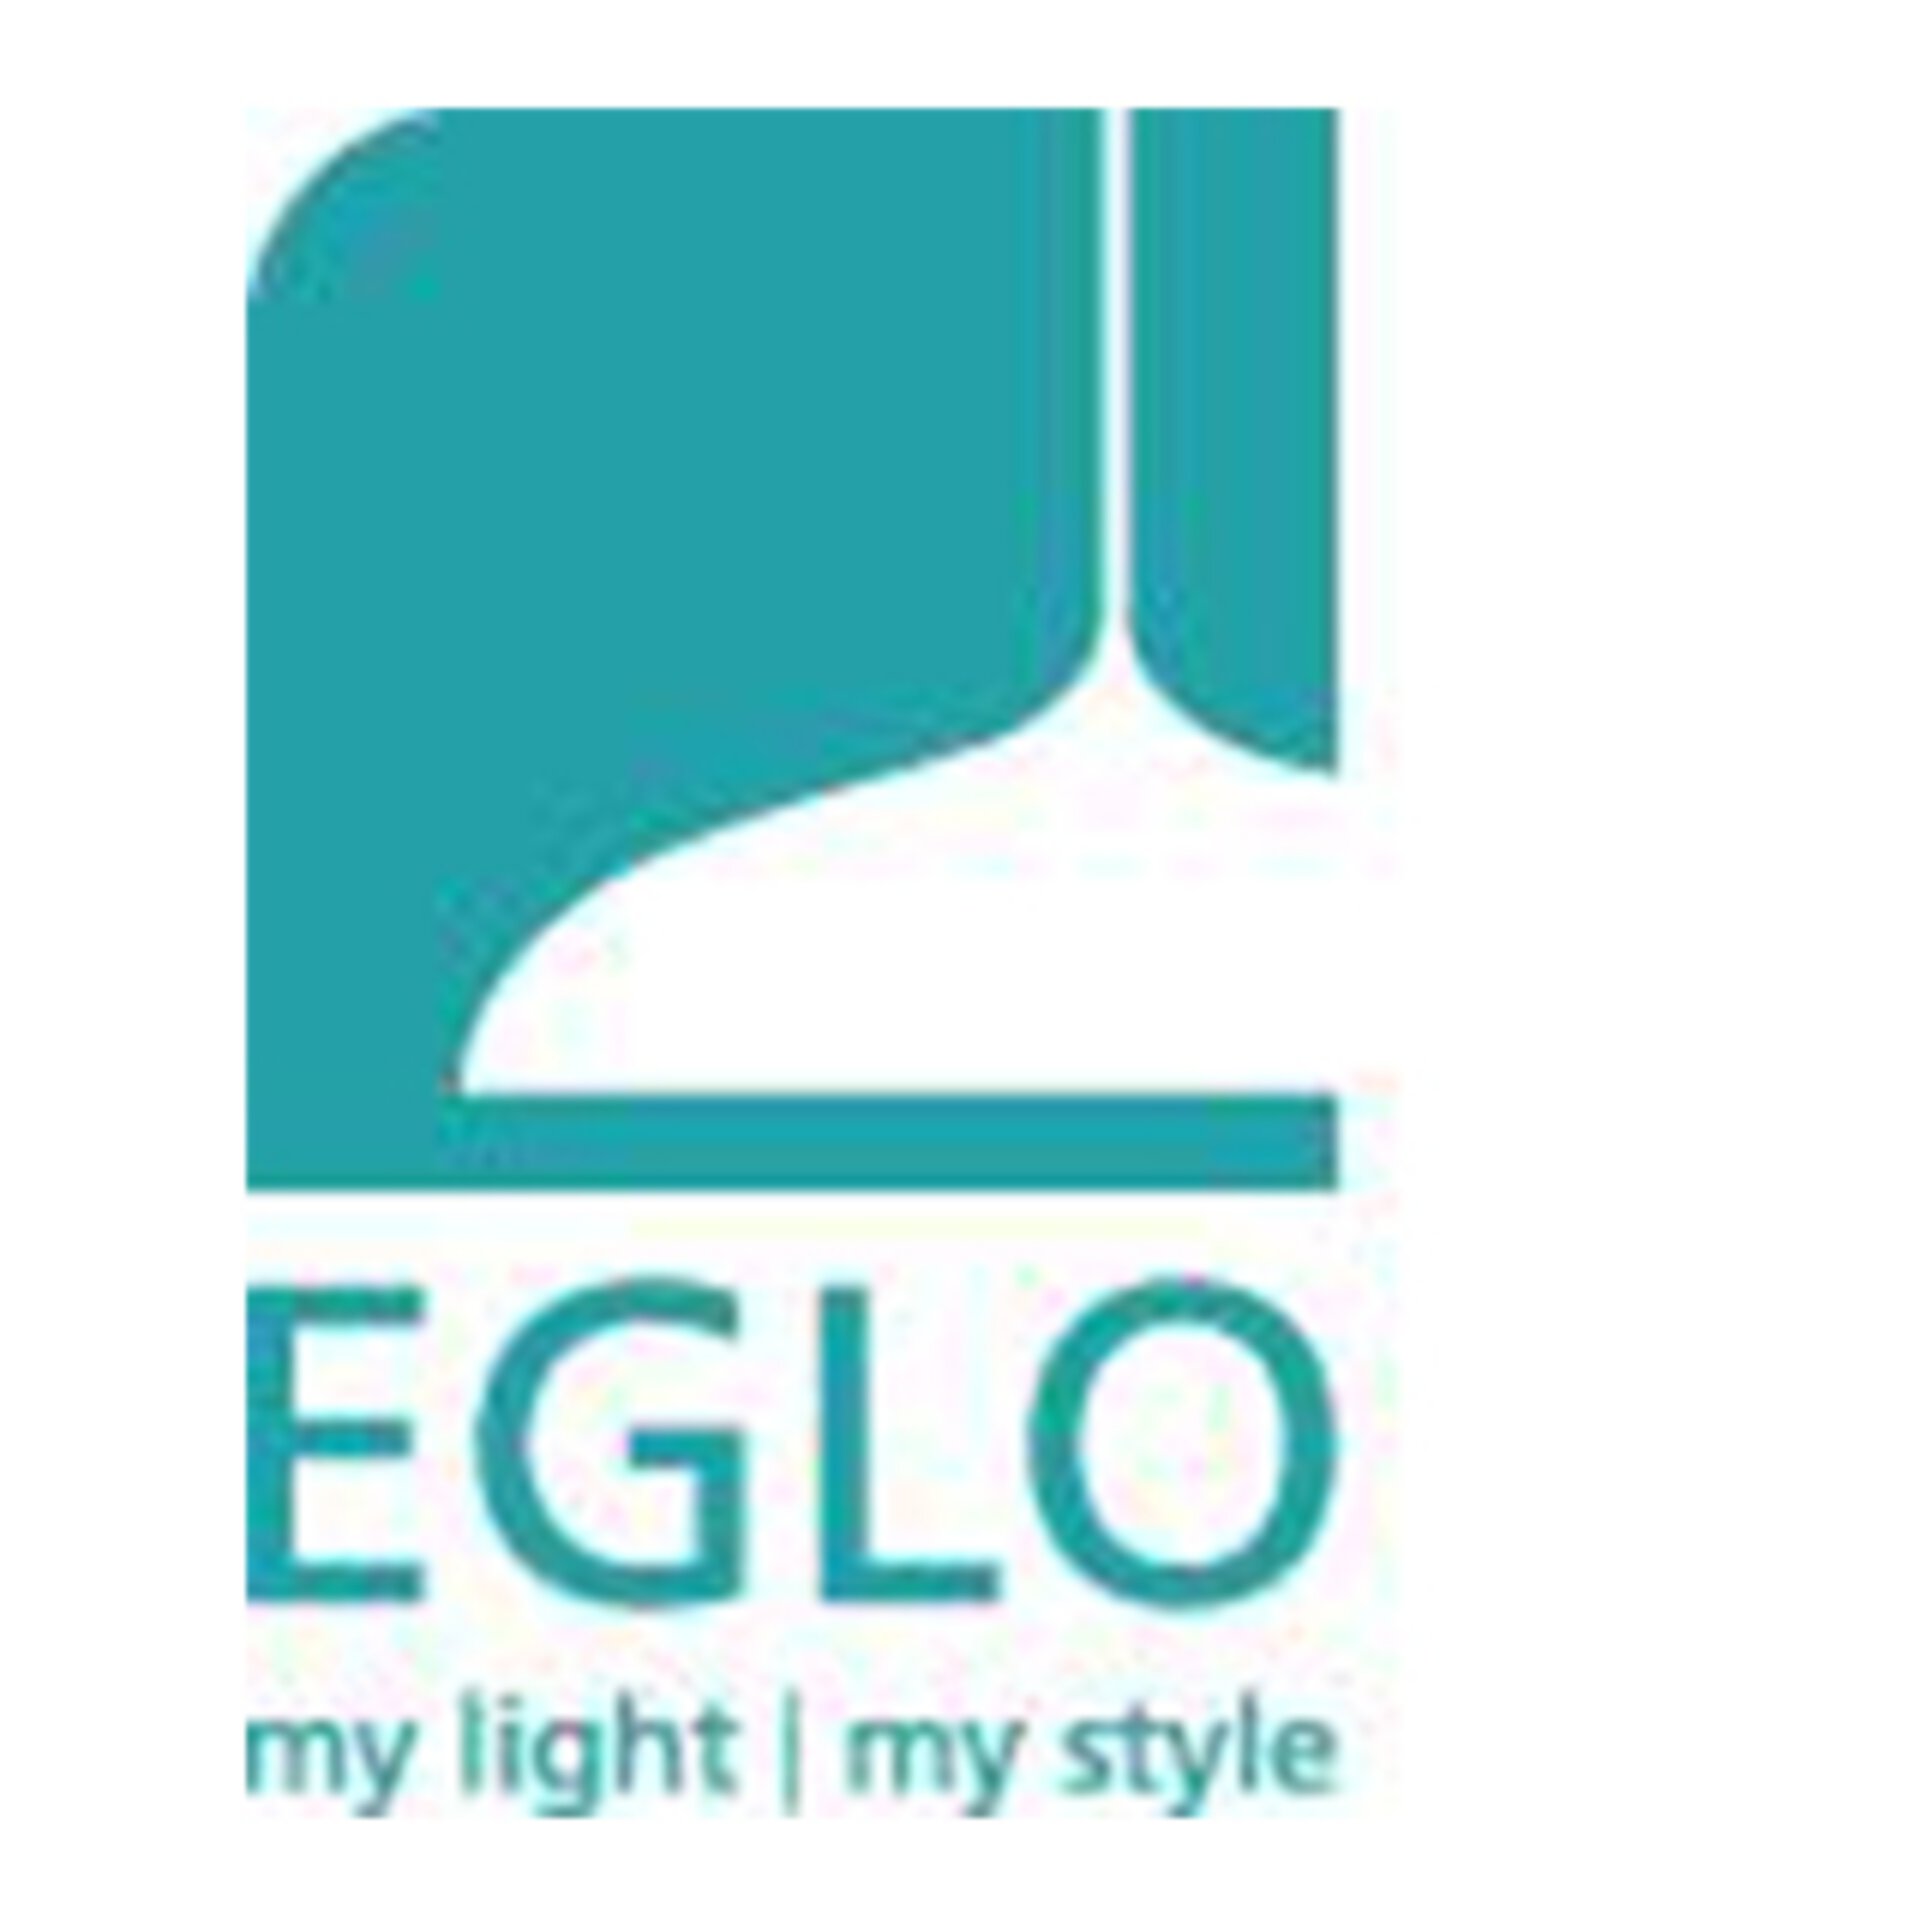 "EGLO - my light, my style" Logo